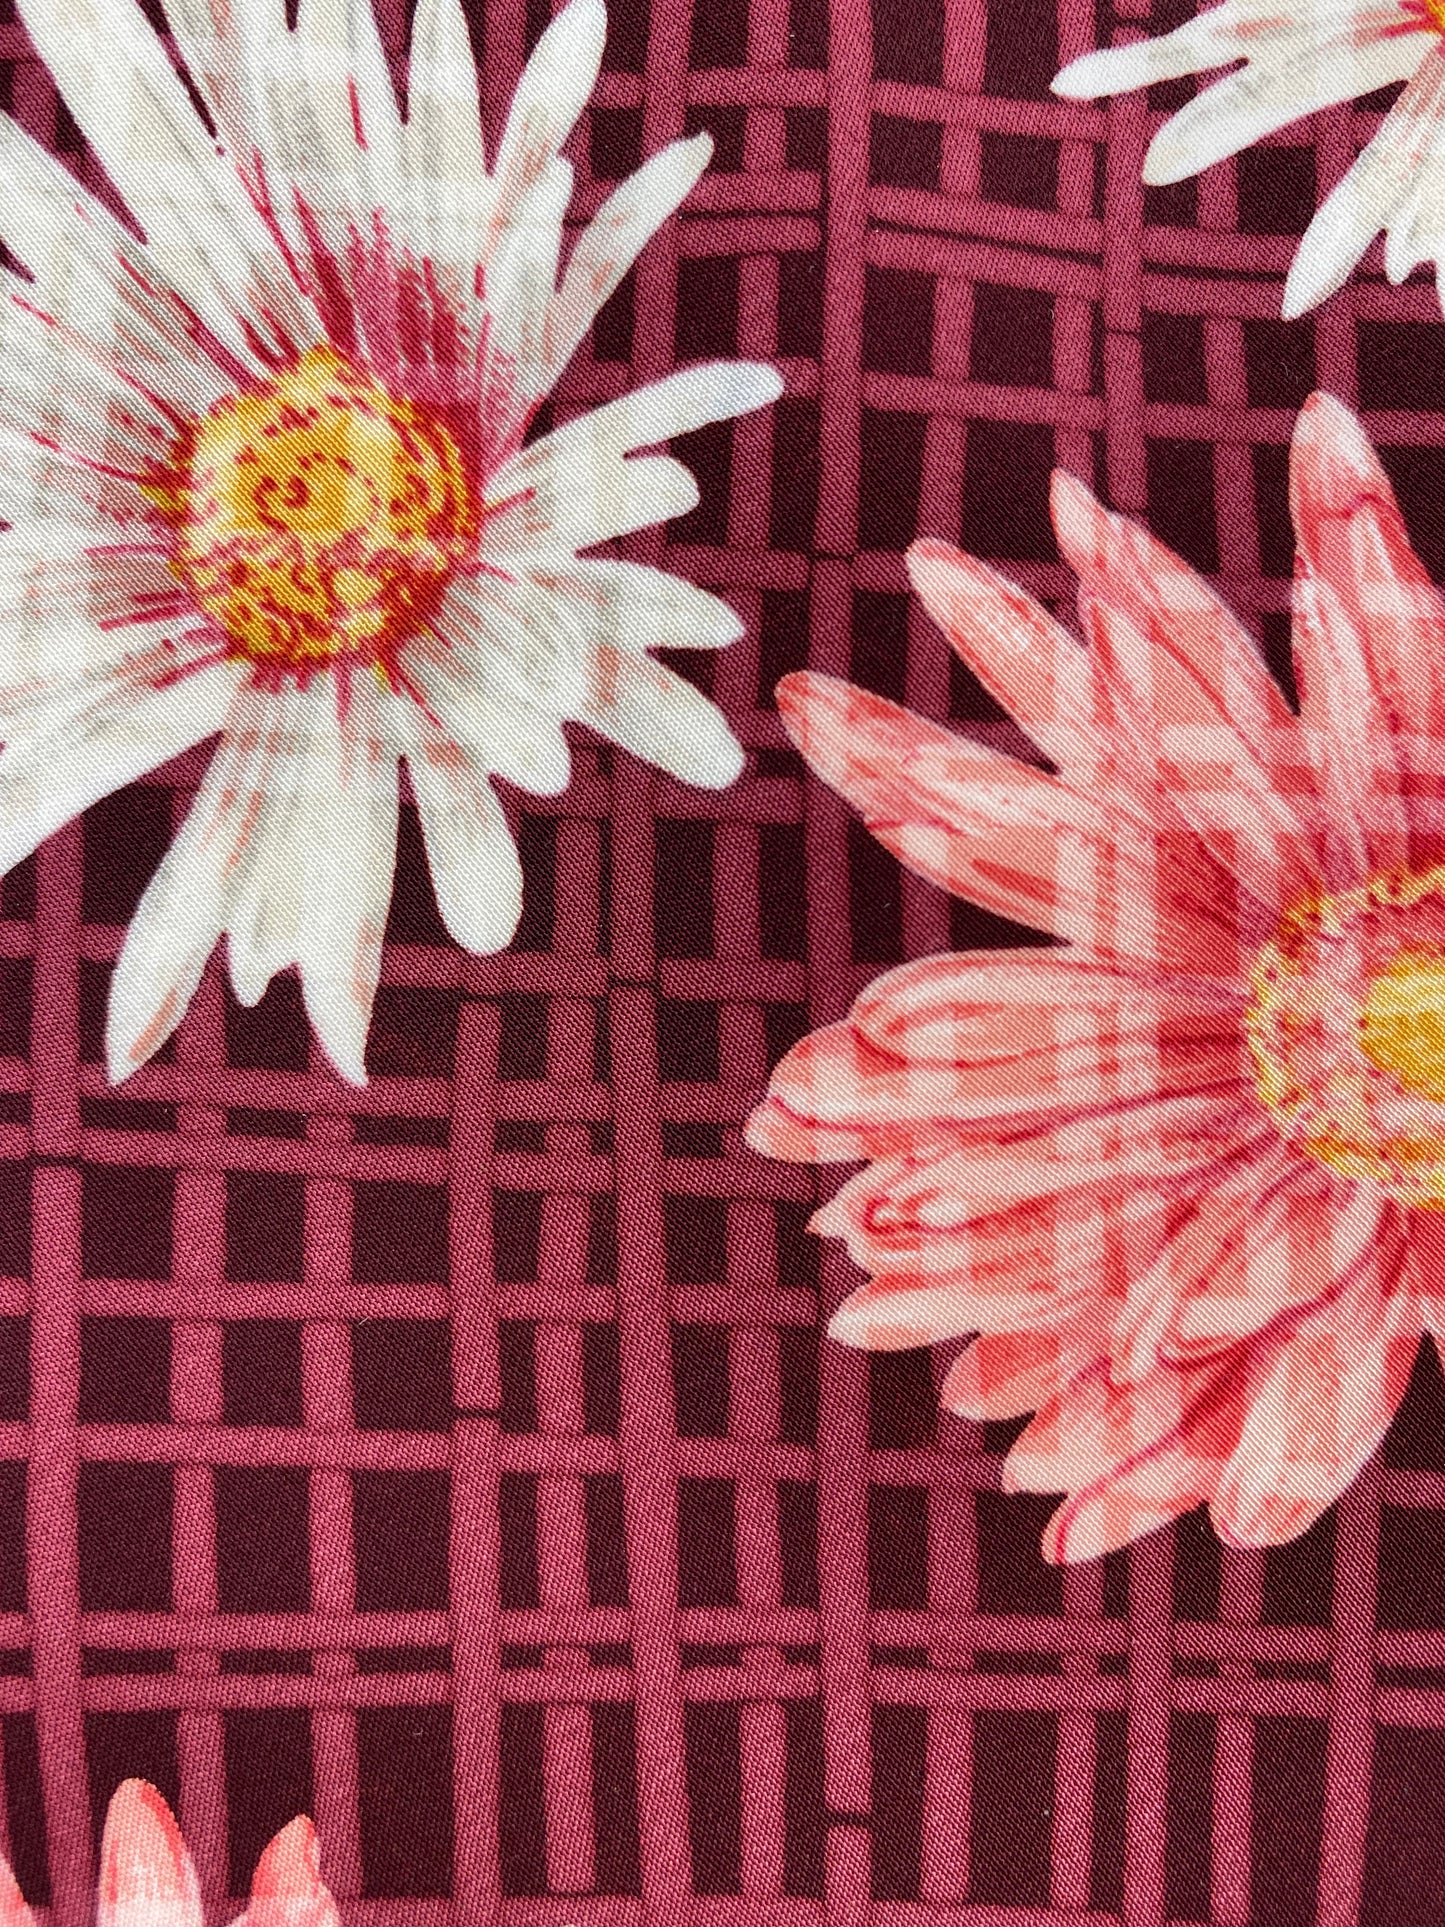 Close-up of: 90s Deadstock Silk Necktie, Men's Vintage Wine/ Pink/ White Floral Daisy Pattern Tie, NOS